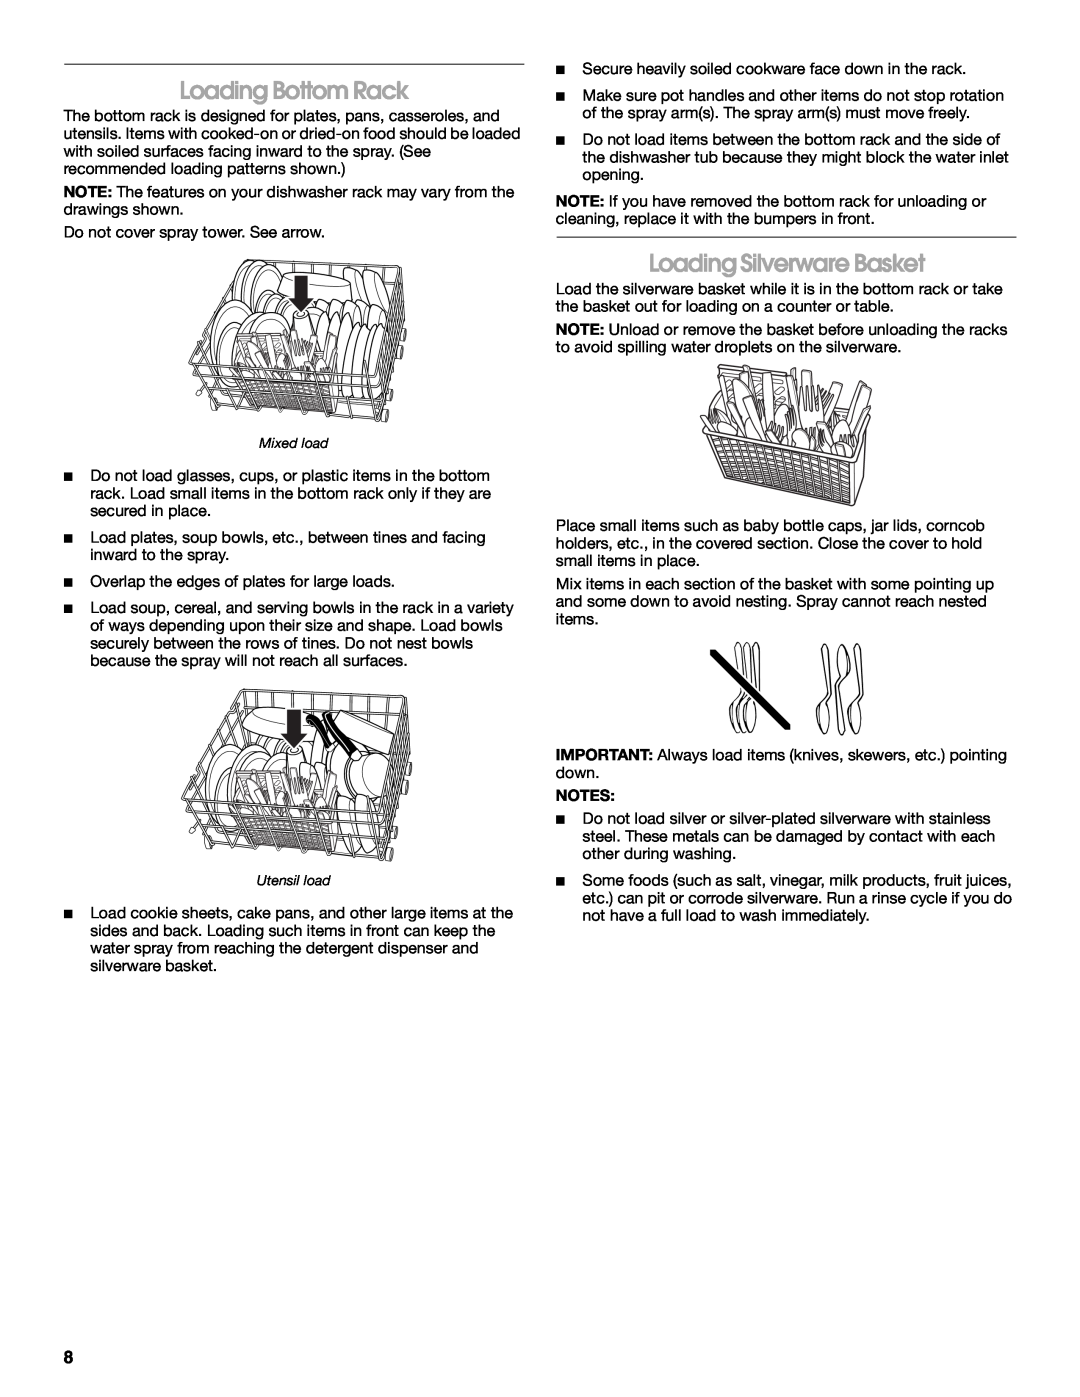 Estate TUD1000R manual Loading Bottom Rack, Loading Silverware Basket, Notes 